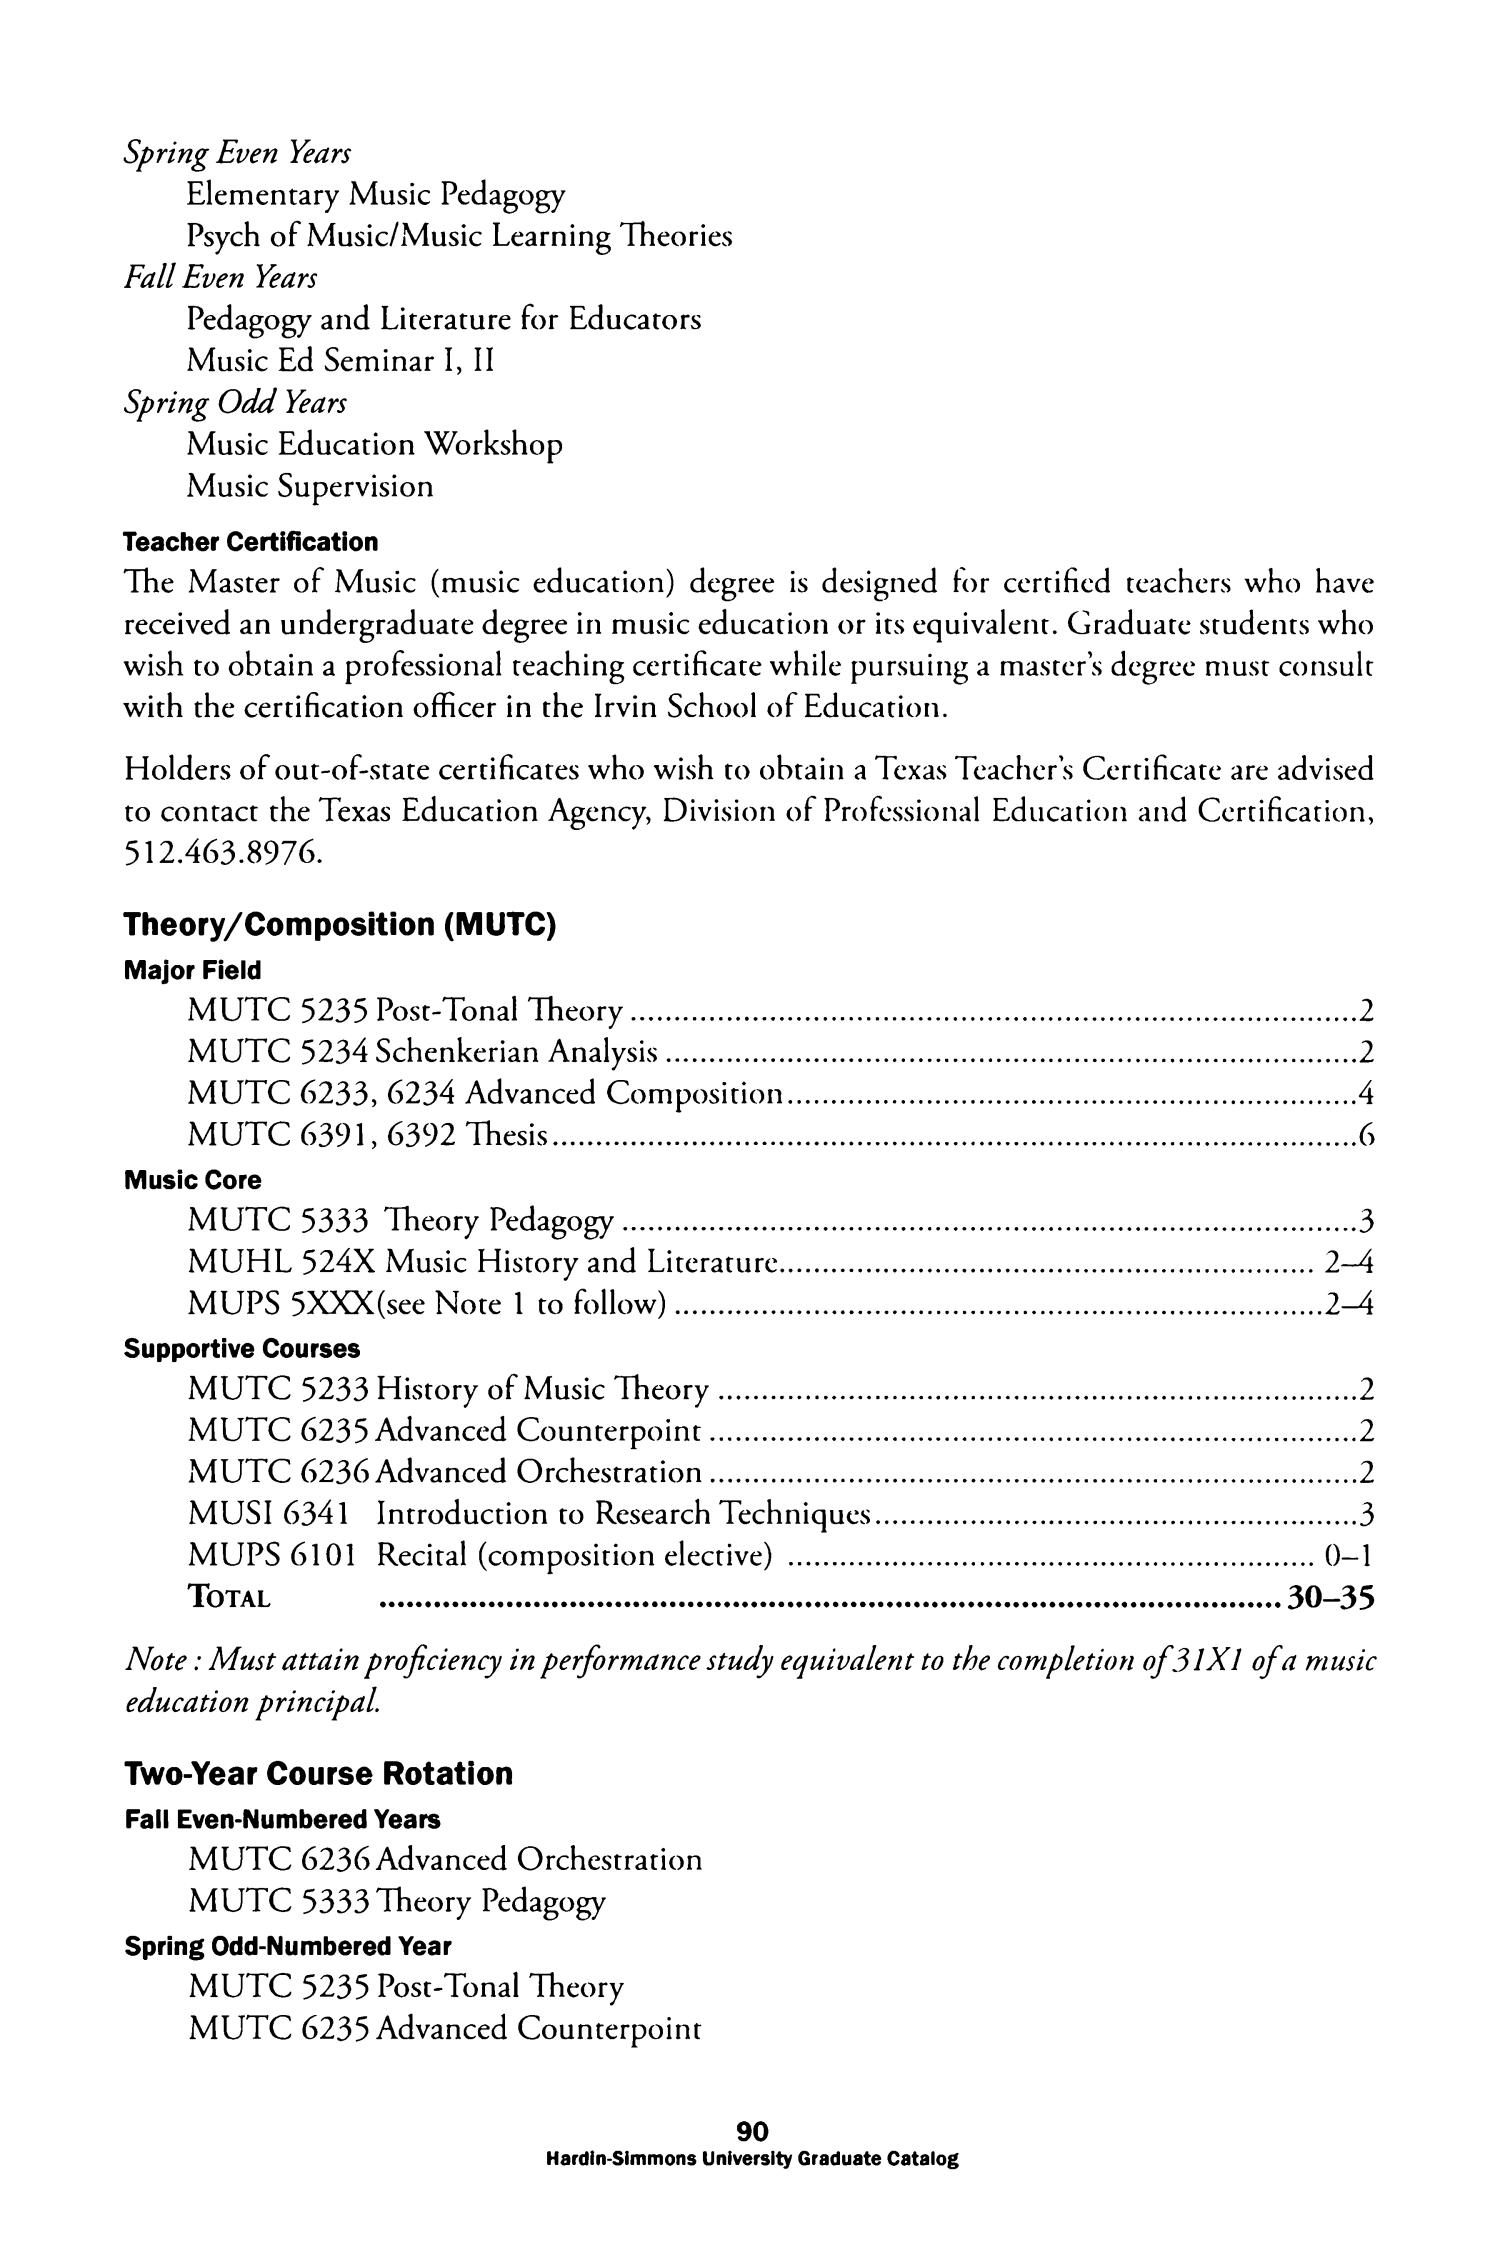 Catalog of Hardin-Simmons University, 2009-2010 Graduate Bulletin
                                                
                                                    90
                                                